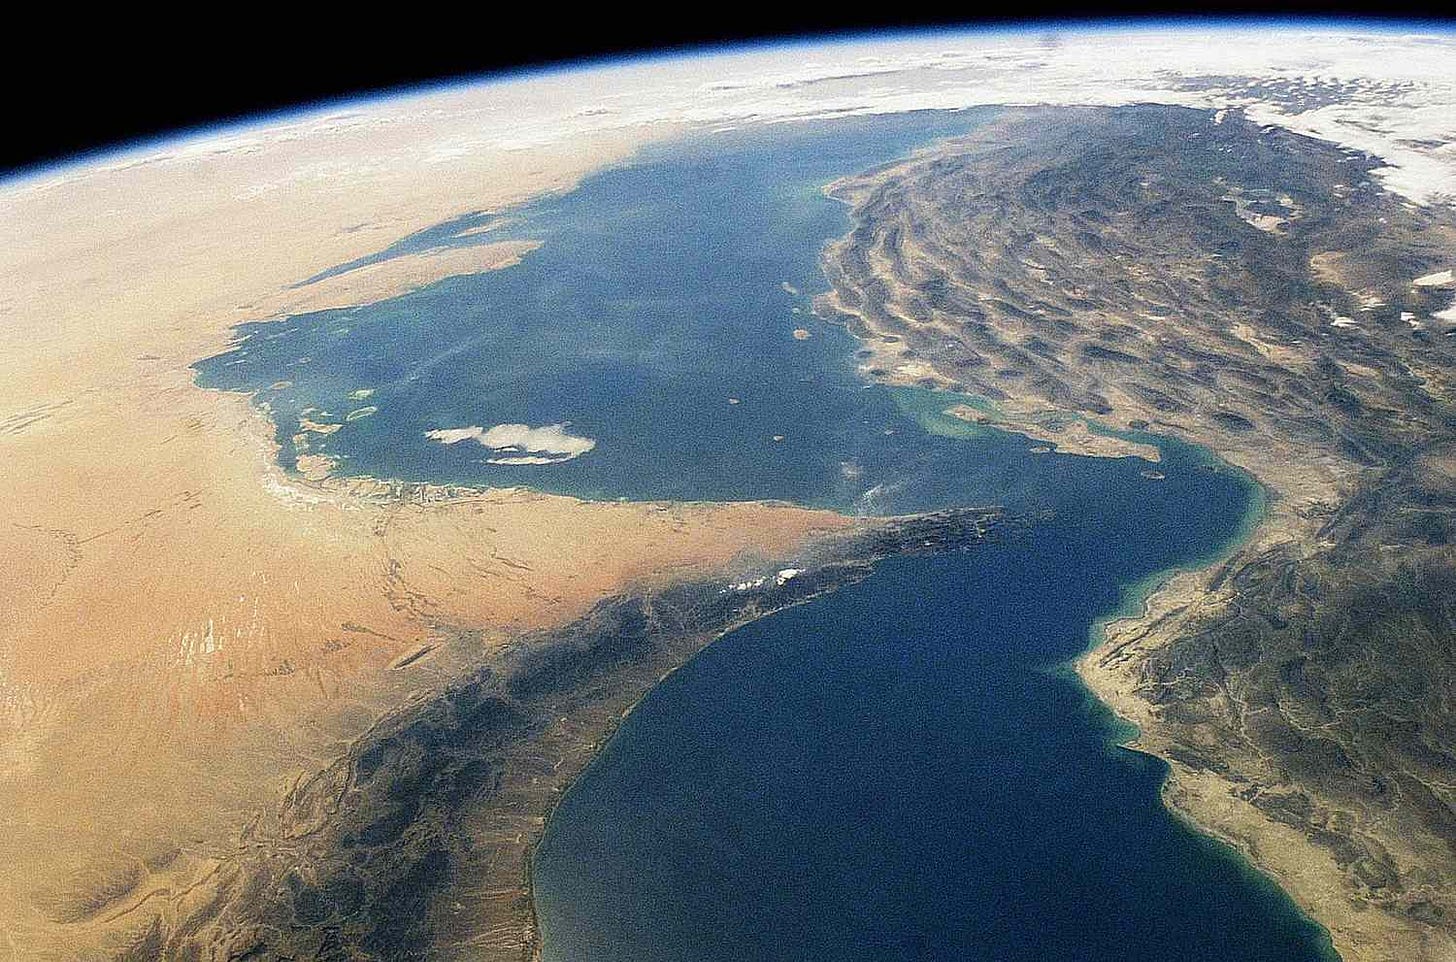 Strait of Hormuz - History and Importance